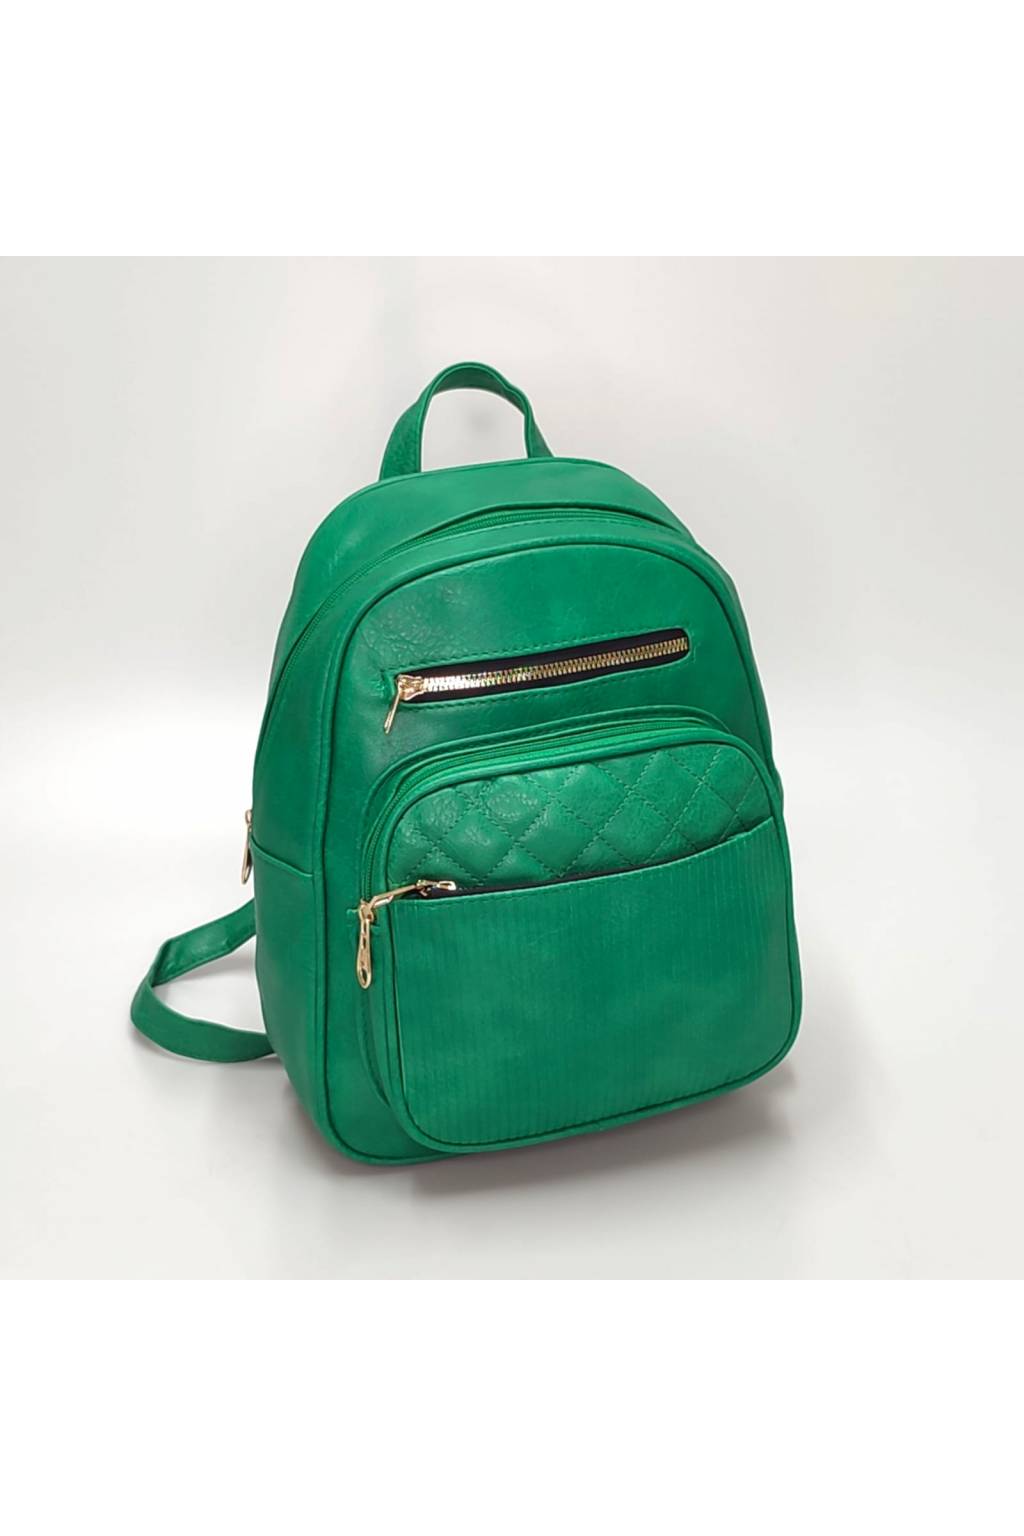 Dámsky ruksak 8132 zelený www.kabelky vypredaj (21)